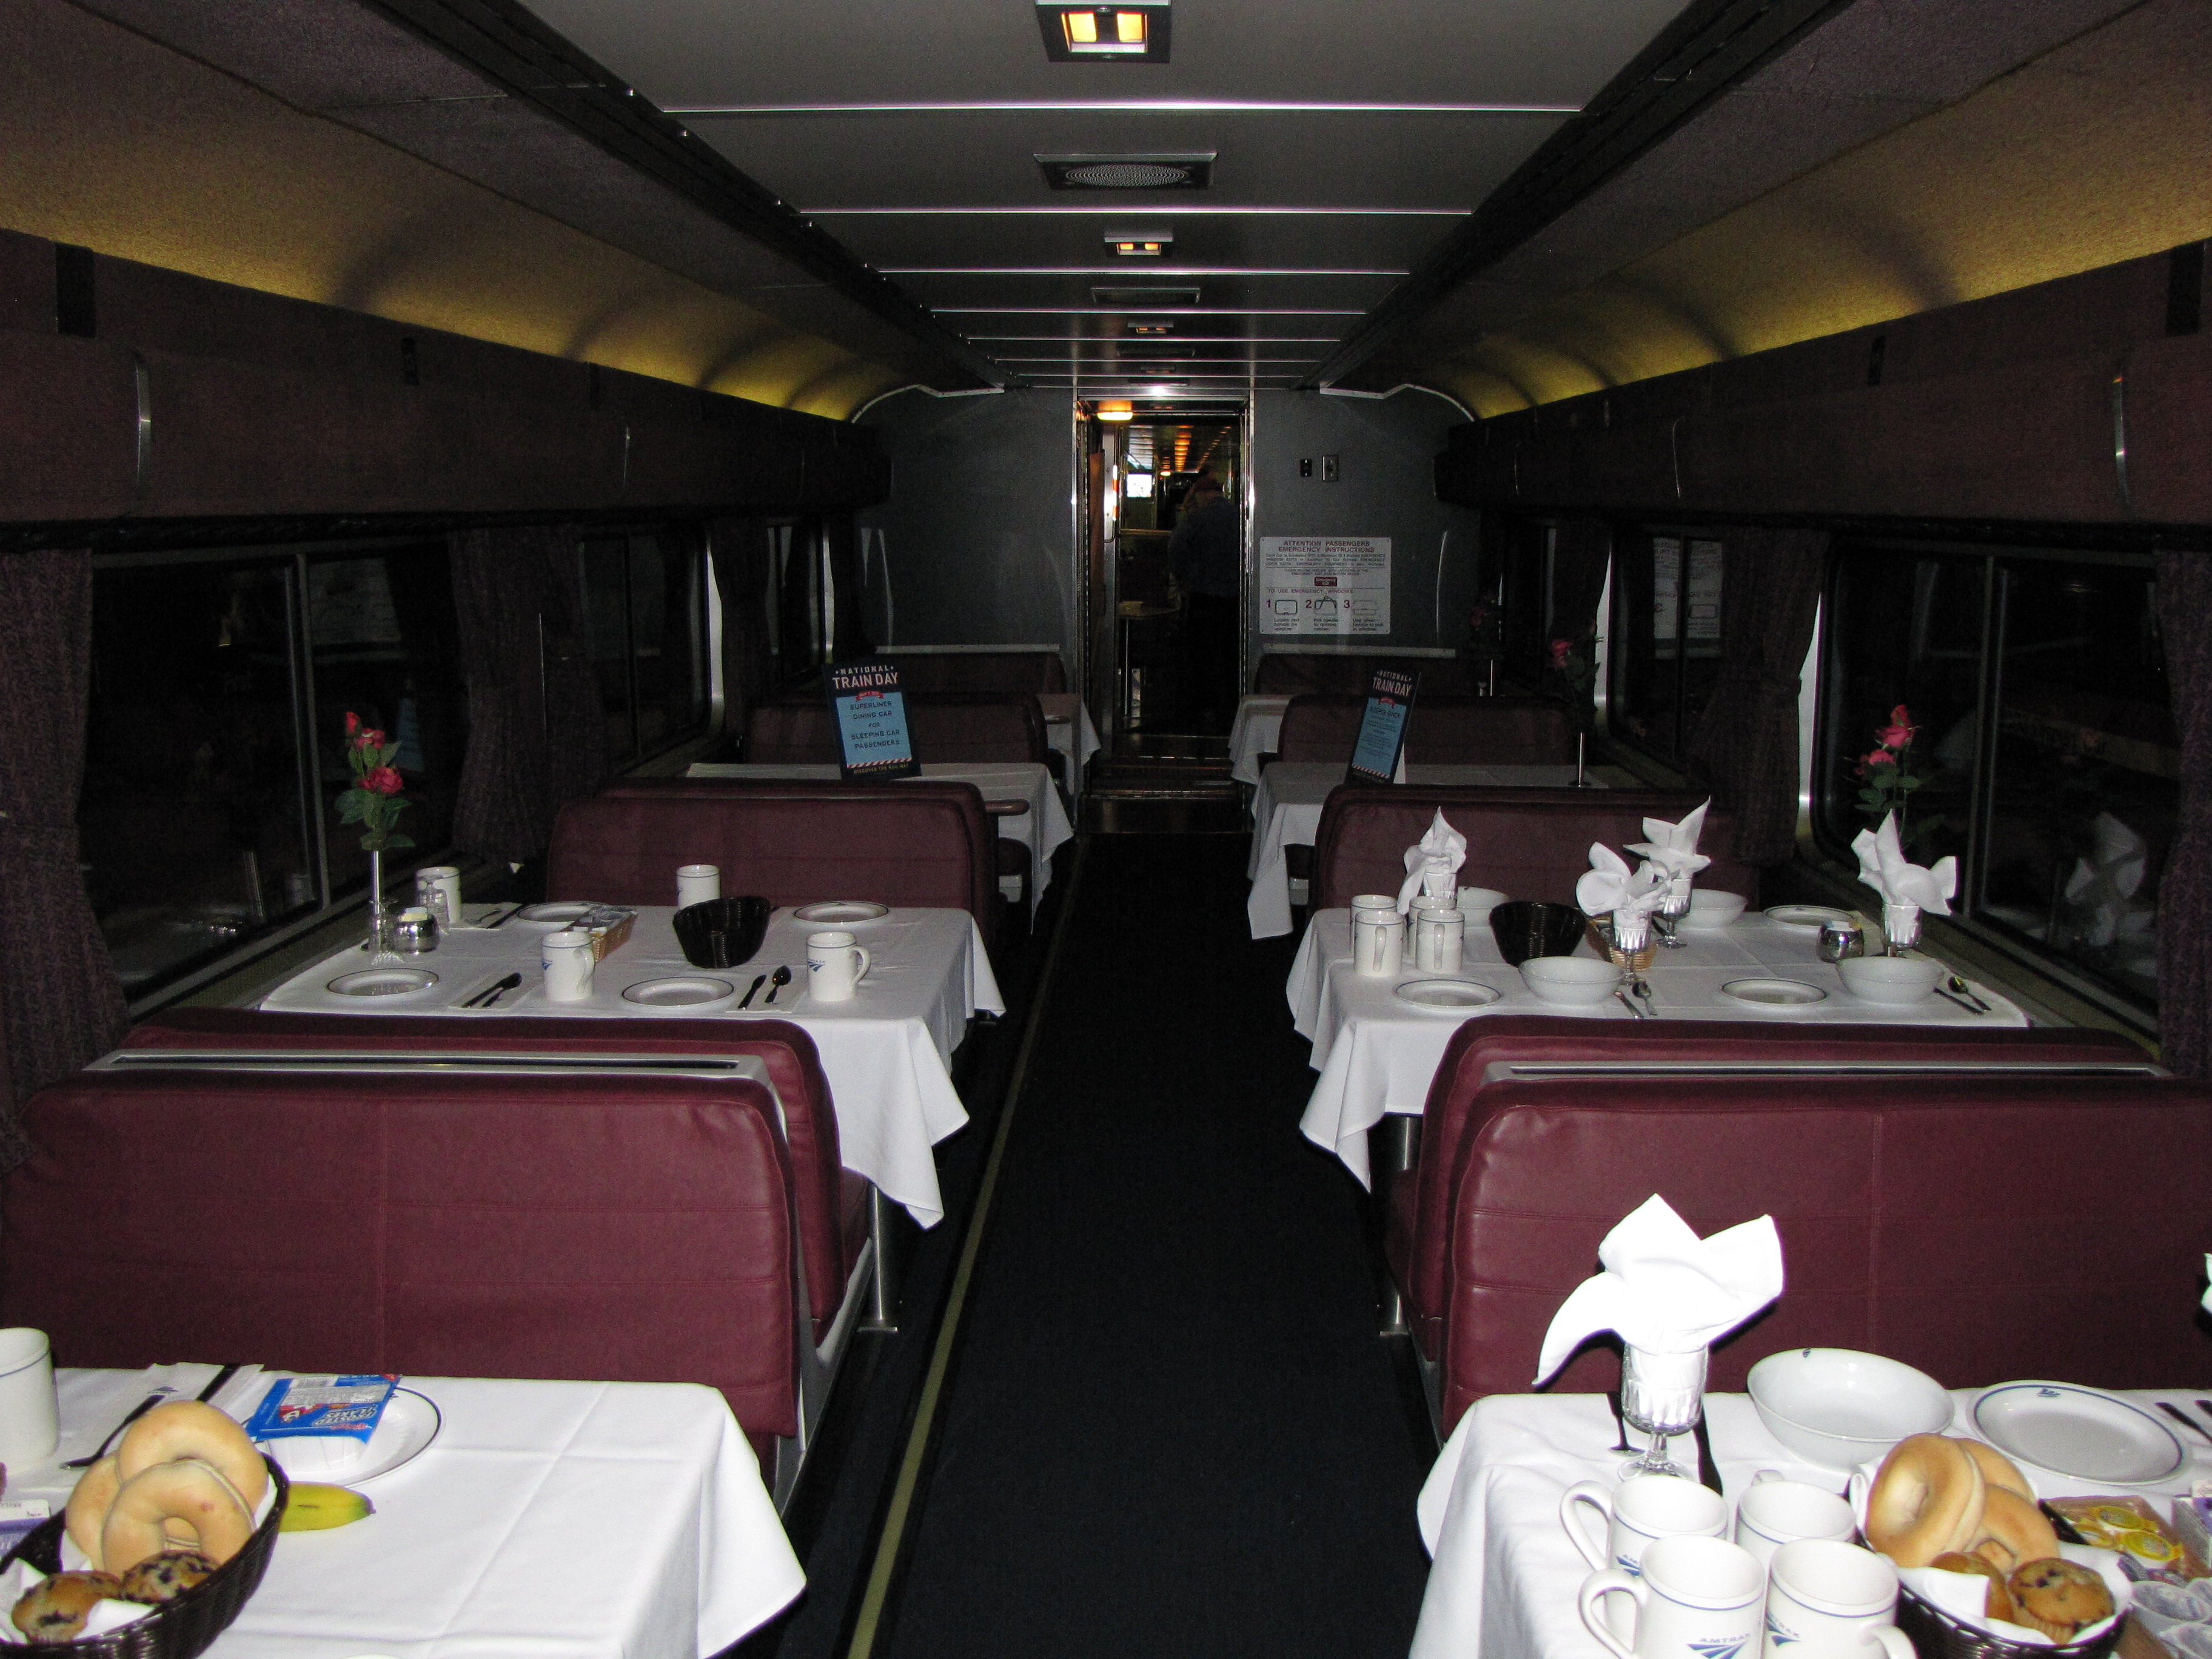 Dining car on a train 790x776 : DesignPorn